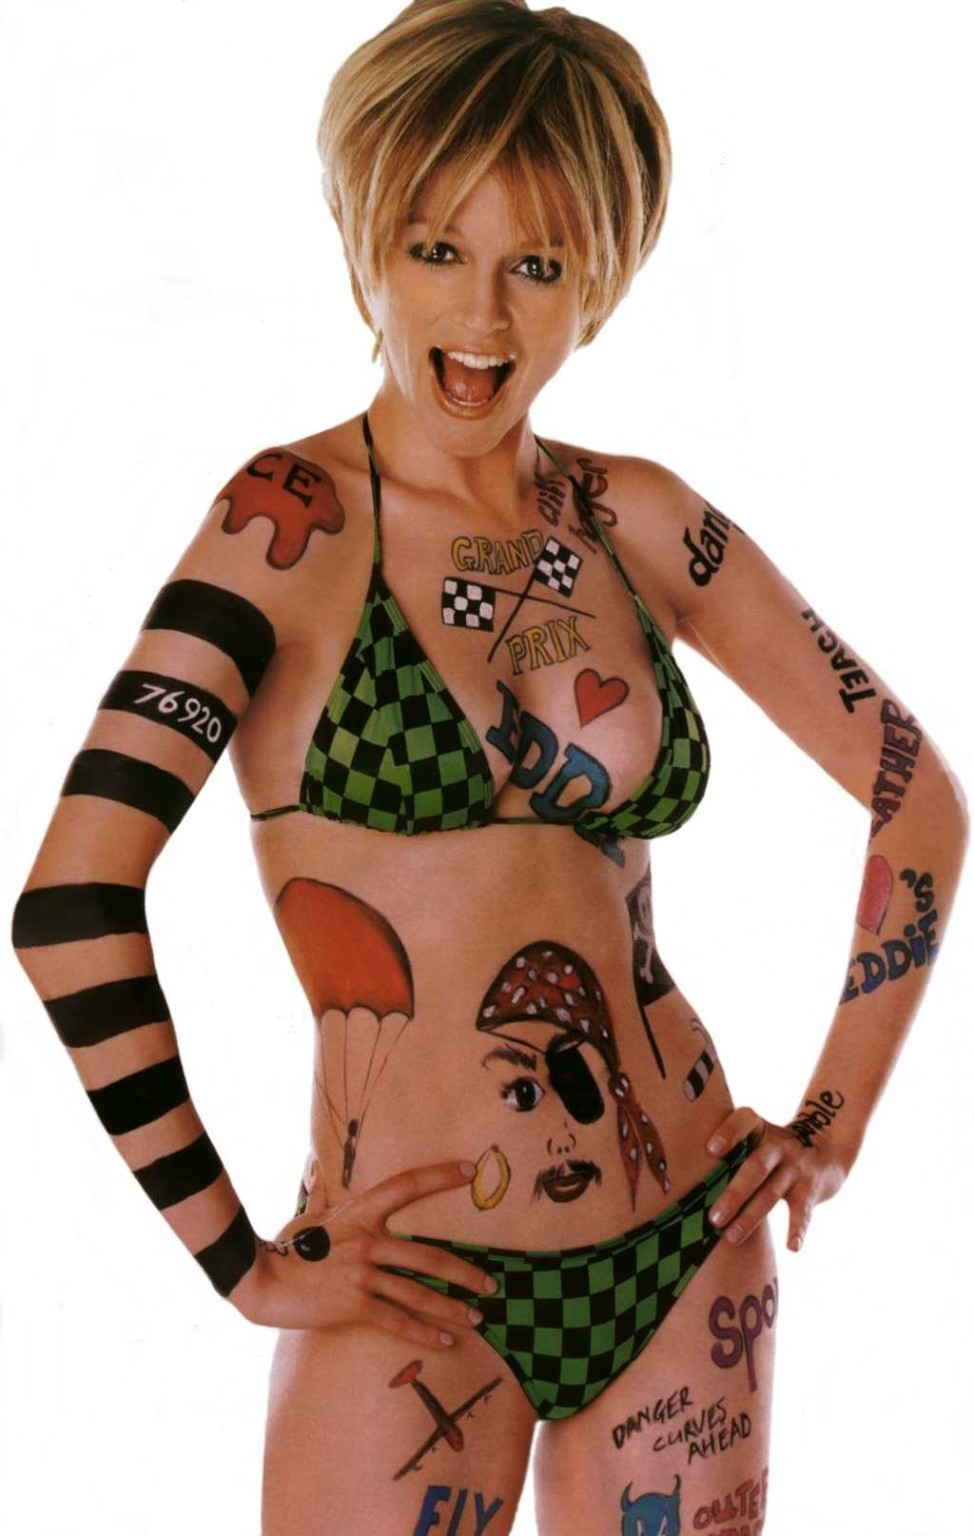 L'eccentrica attrice Heather Graham gode di nudità all'aperto
 #73763298